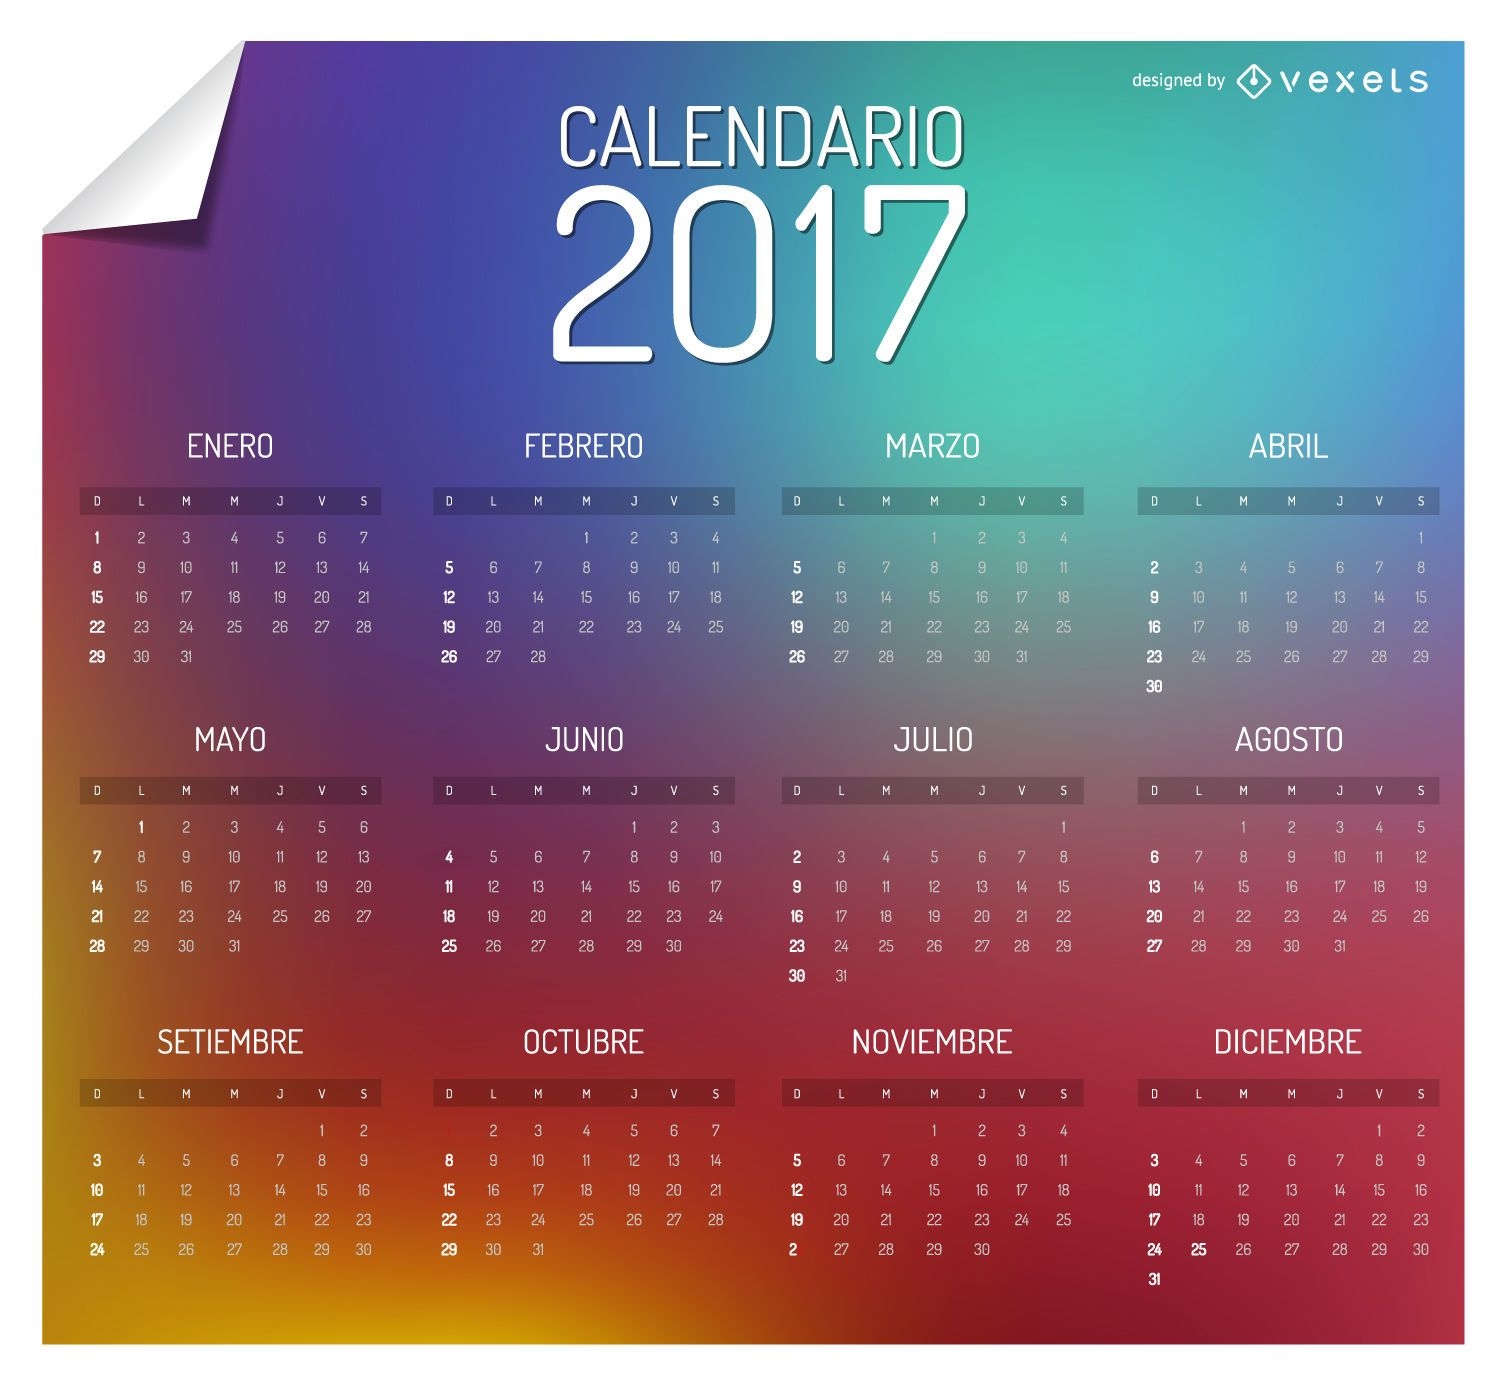 Colorido calendario 2017 en espa?ol